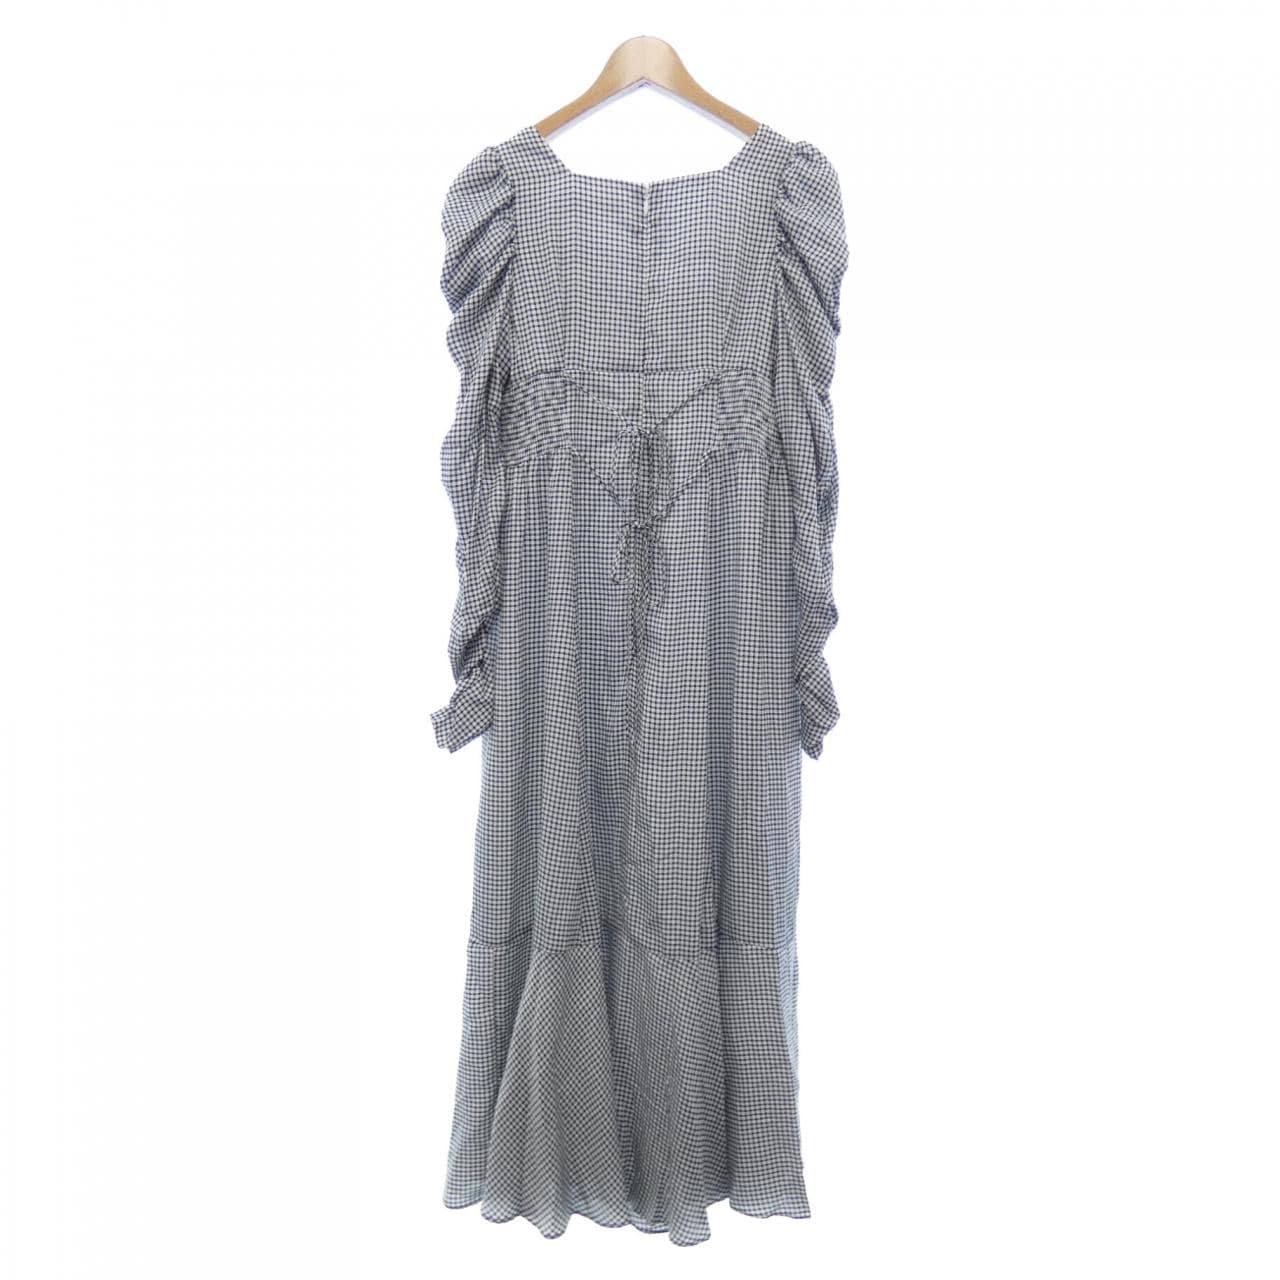 Selford CELFORD dress